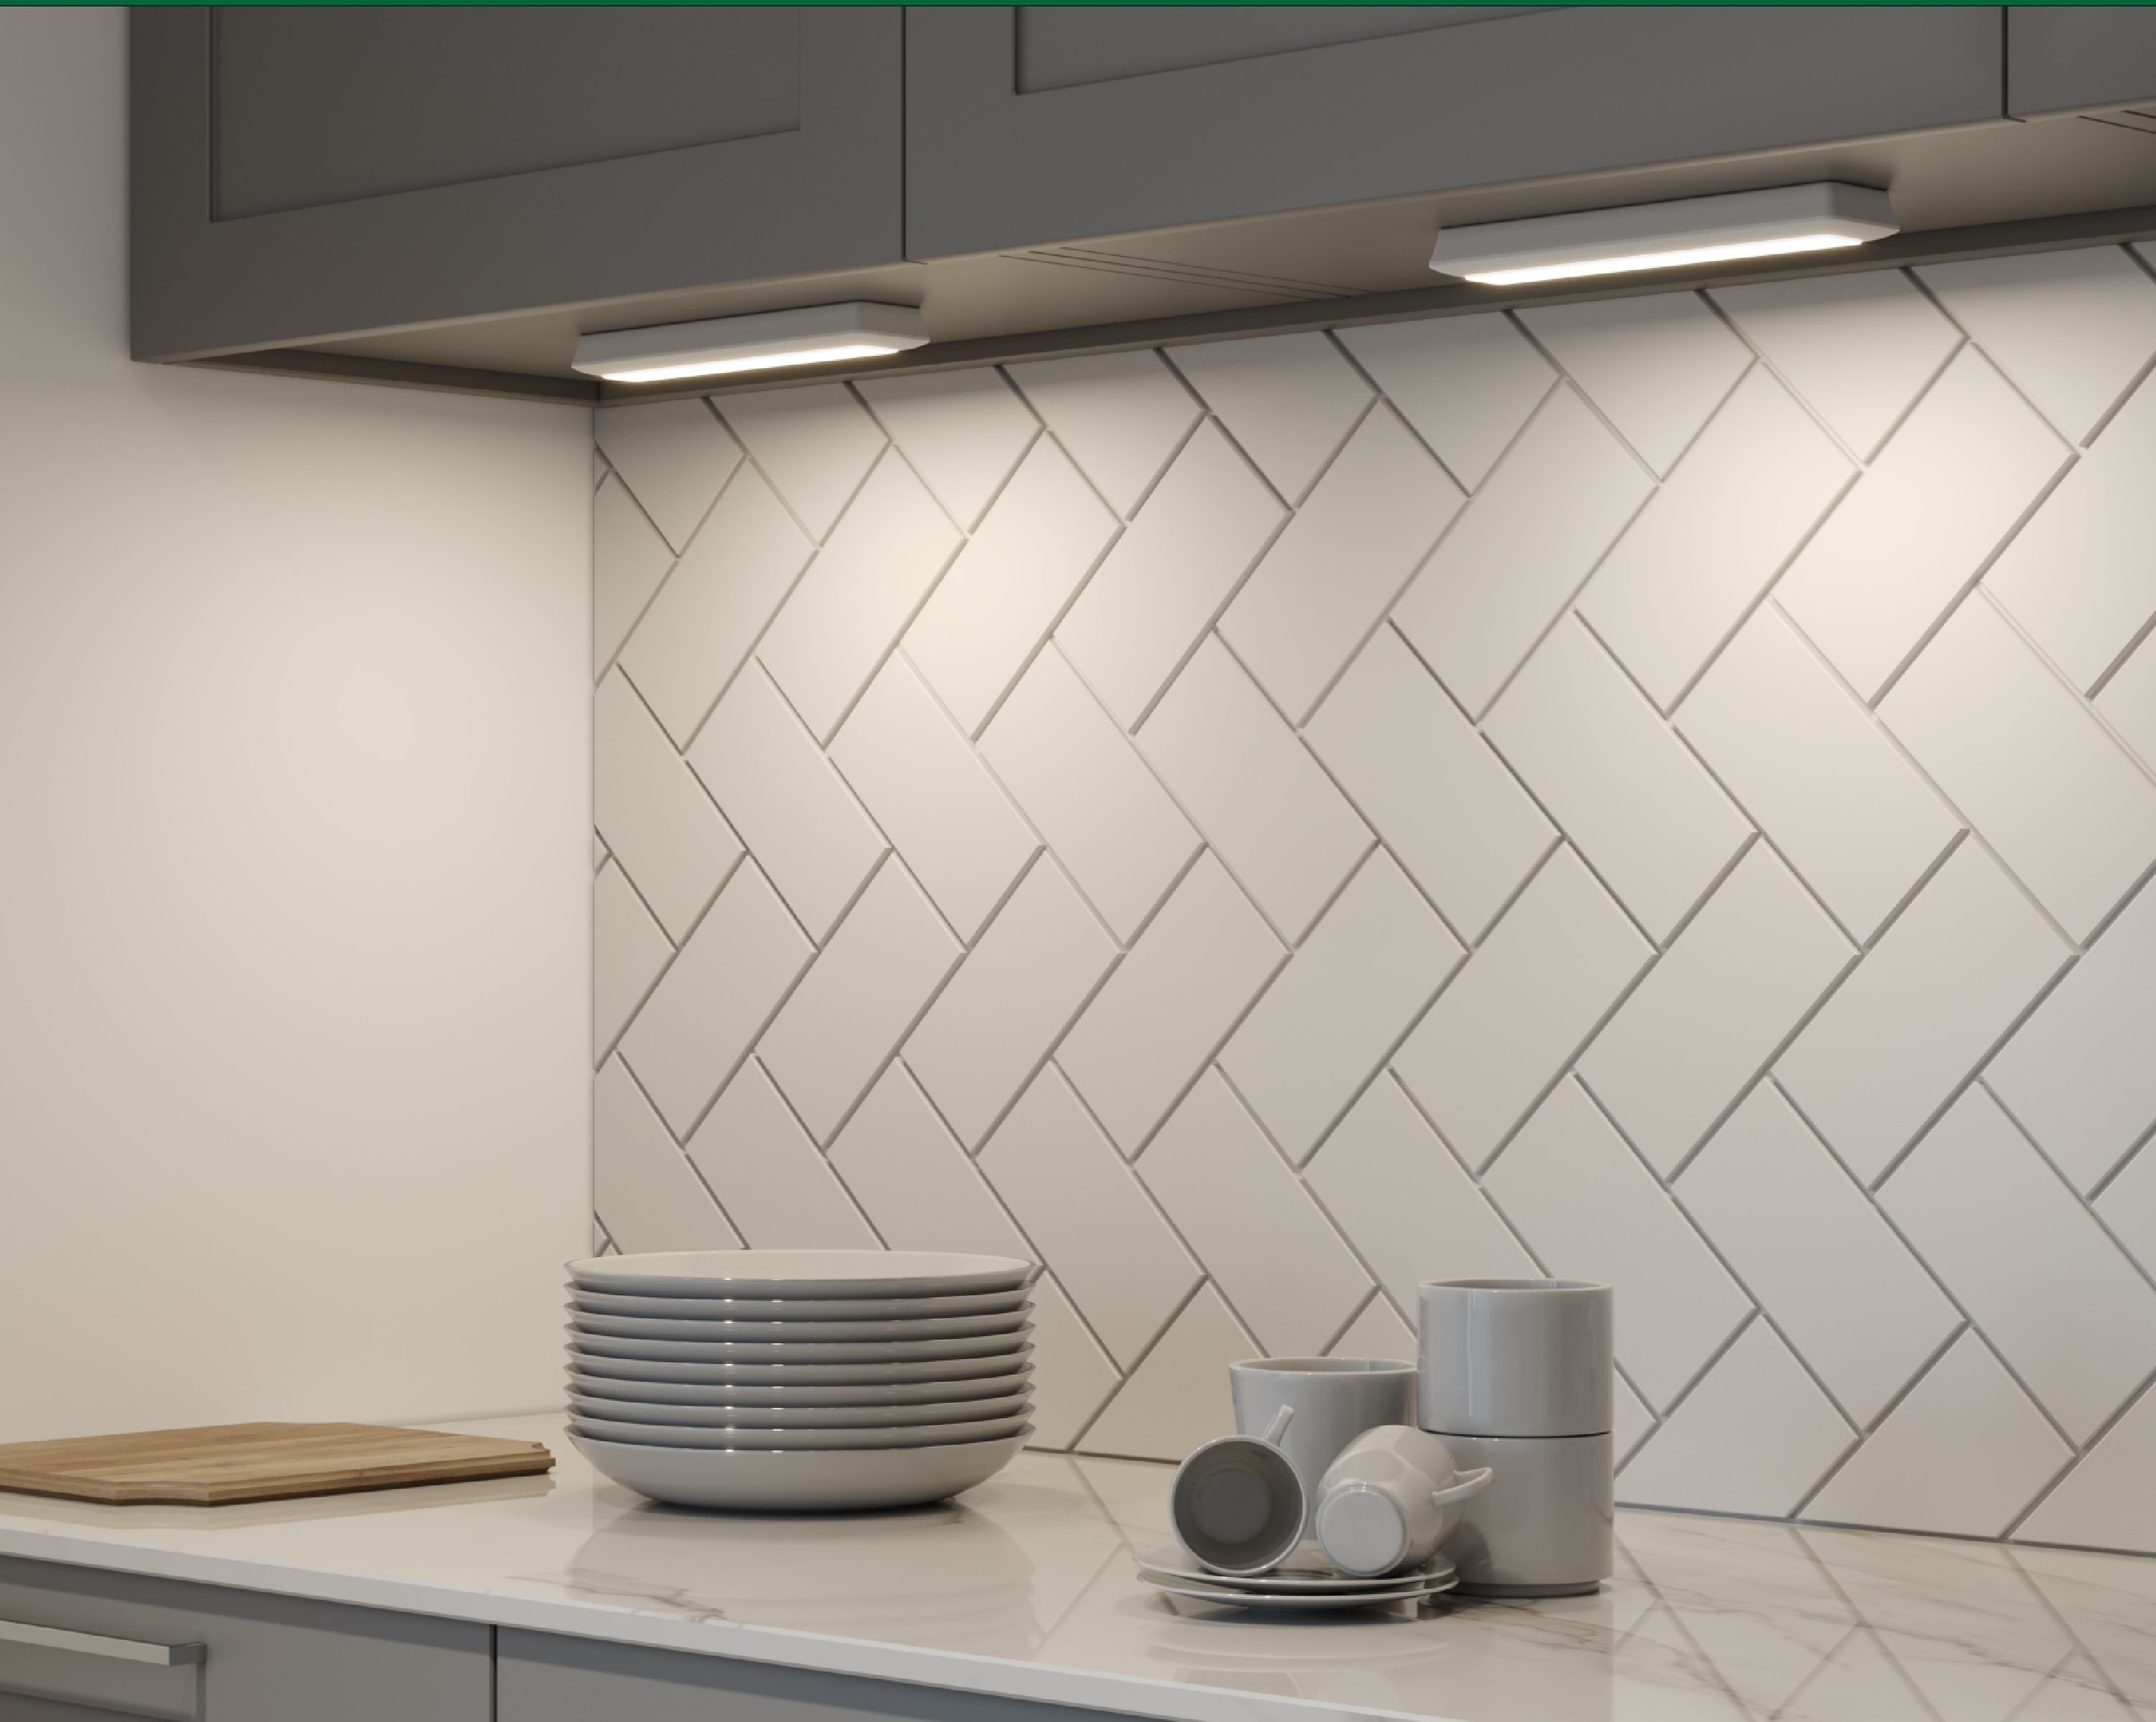 Kitchen Under Cabinet Lighting Kit LED Bar Fixture COOL White LEDs 6W per Ft 